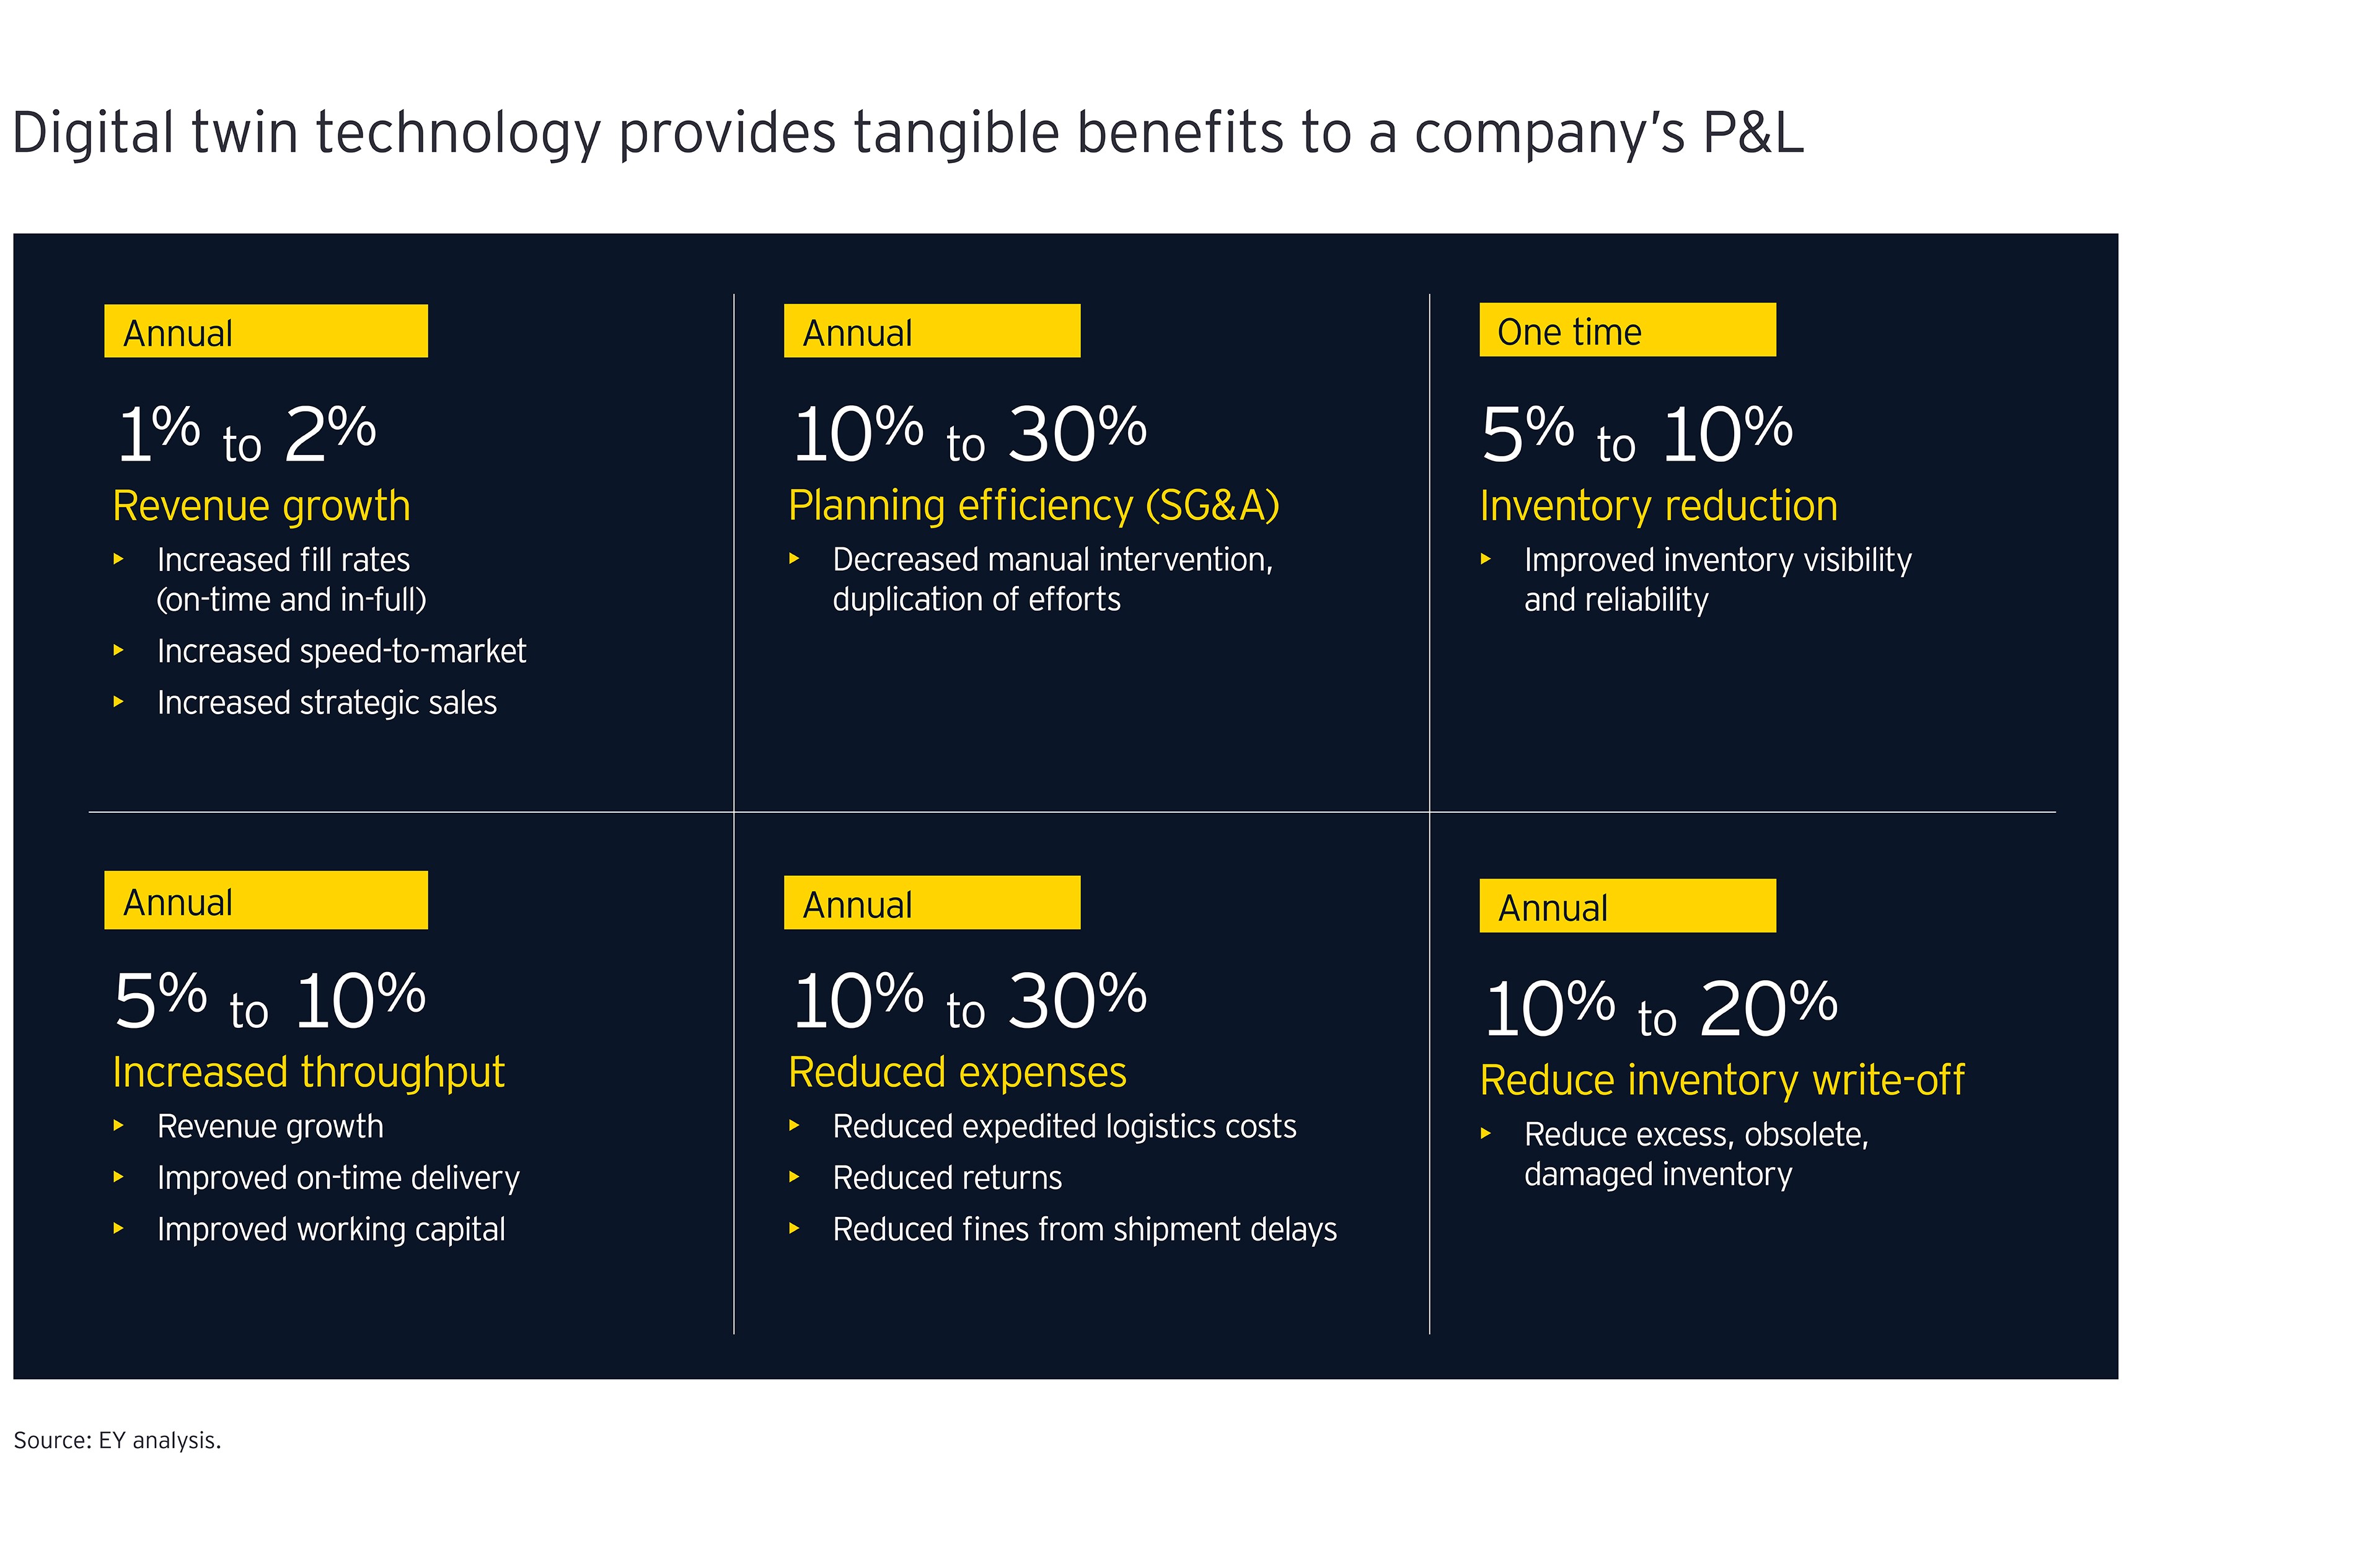 
            La tecnología de réplicas digitales proporciona beneficios tangibles a la P&L
        